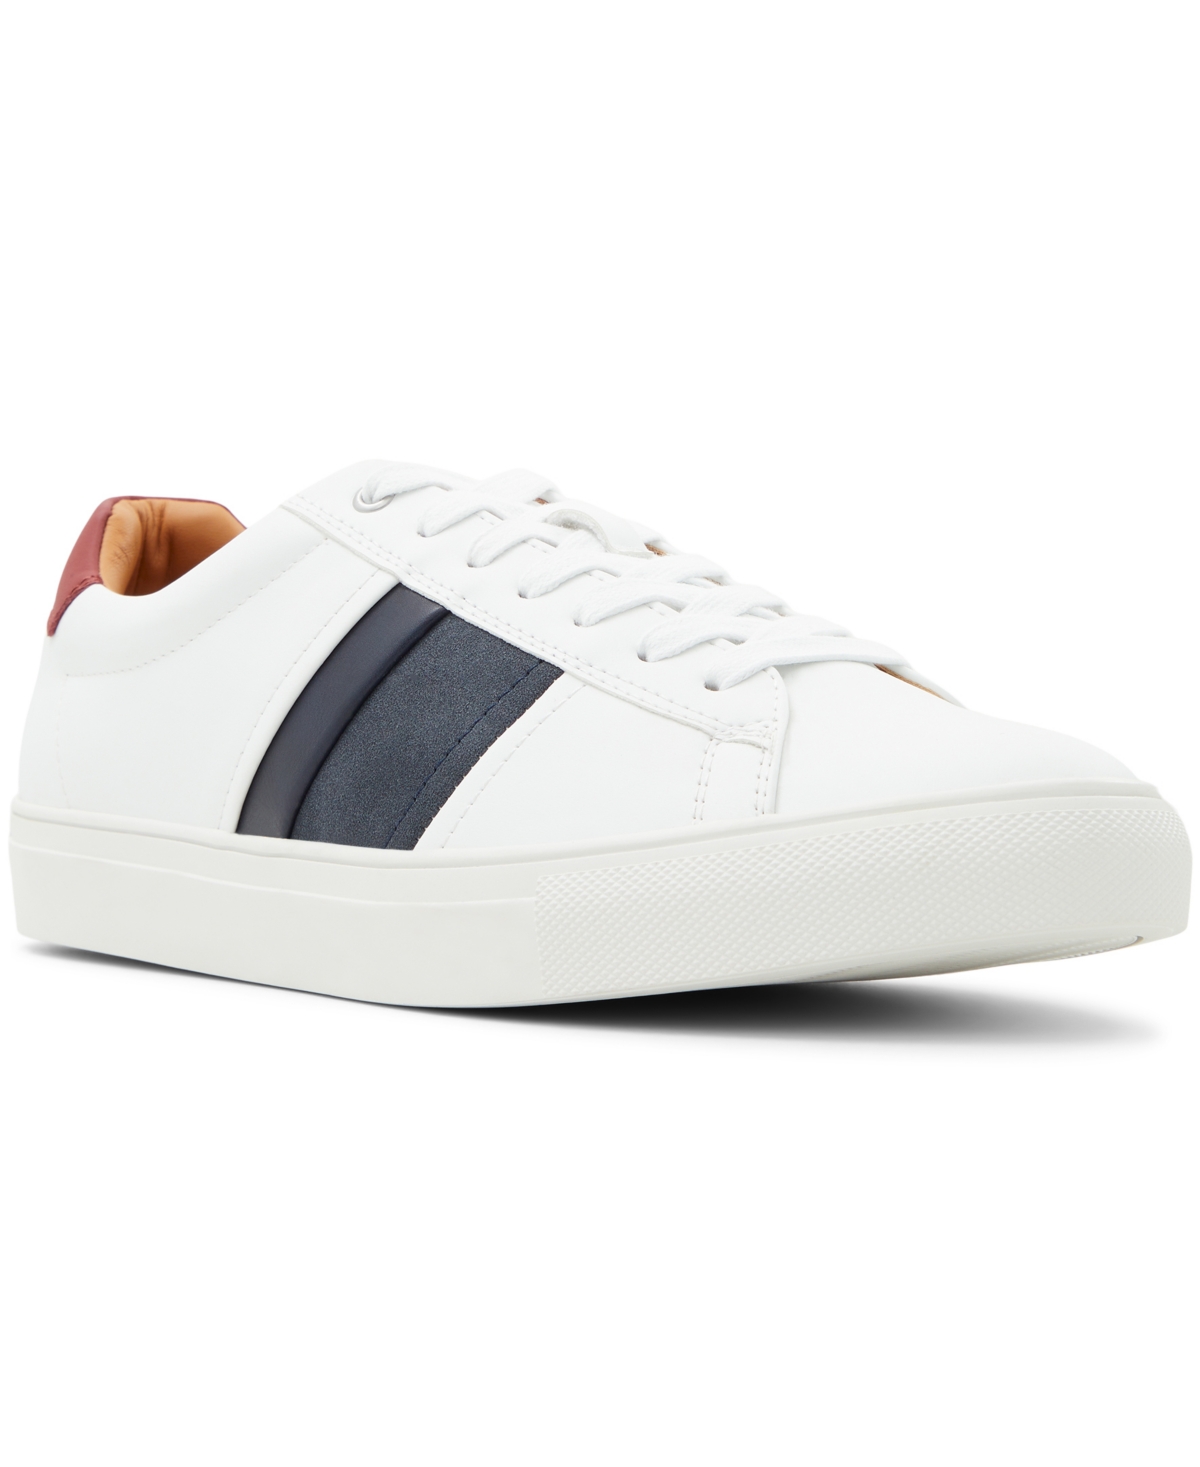 Men's Munroe Fashion Athletics Shoes - White Multi